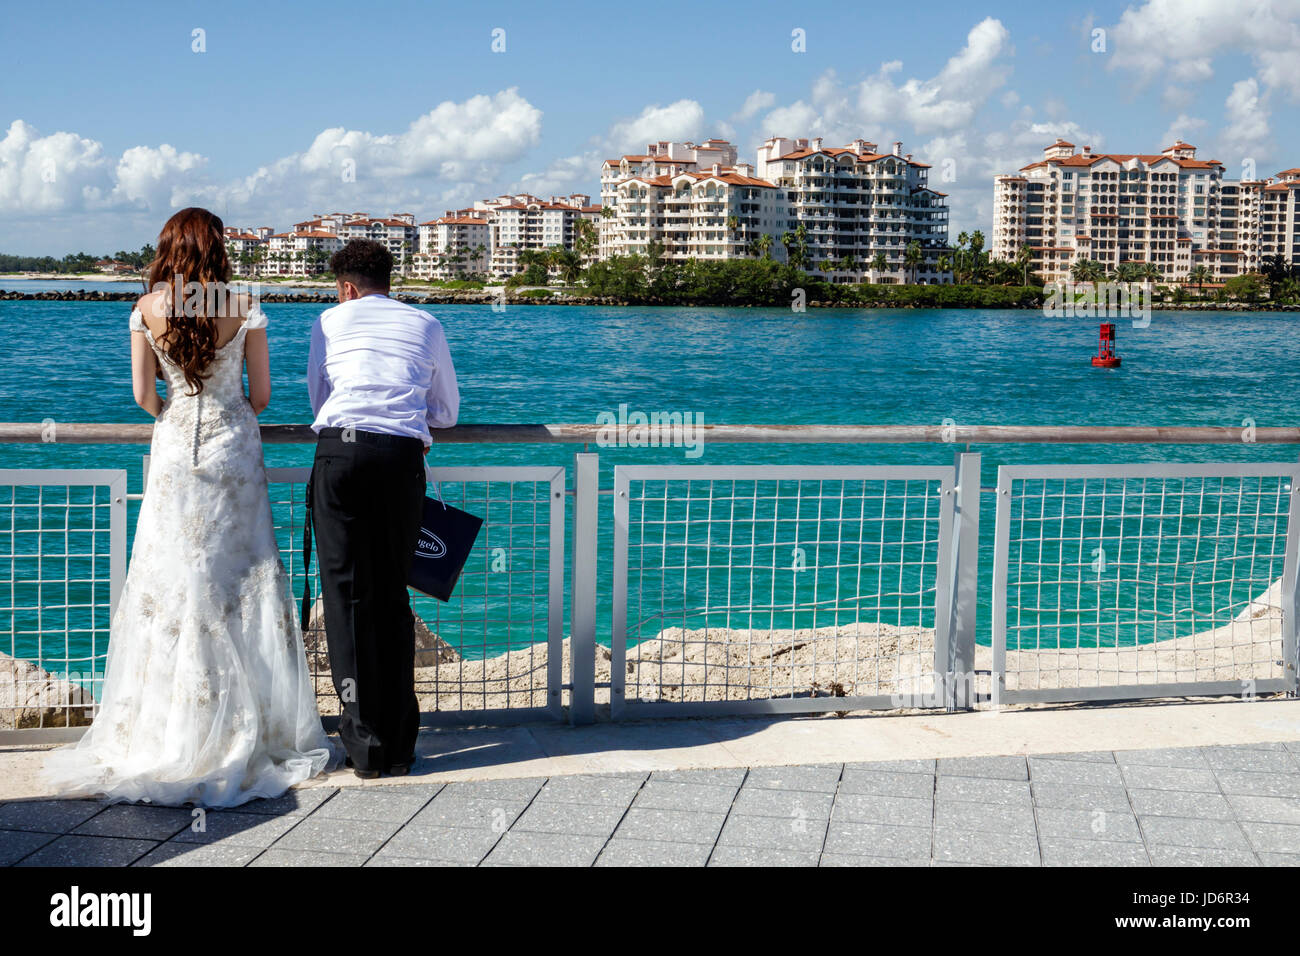 Miami Beach Florida,South Pointe Park,Government Cut,waterfront,Hispanic man men male,woman female women,couple,wedding dress,newlyweds,Fisher Island, Stock Photo